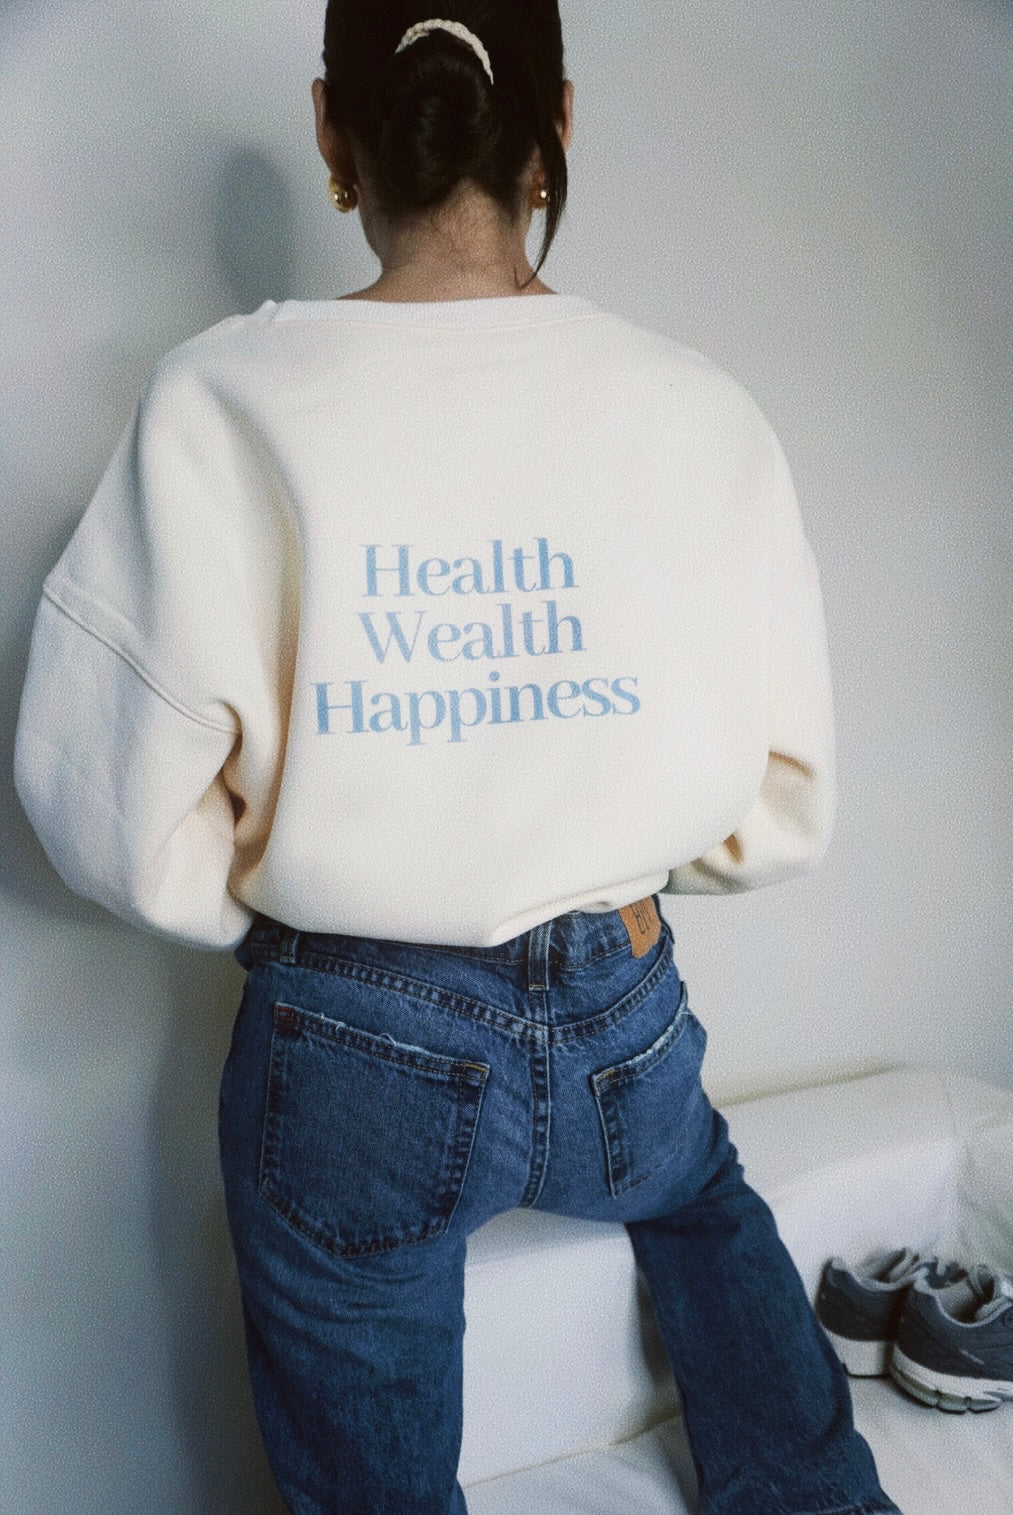 Health Wealth Happiness Apricot Oversized Crewneck Sweatshirt